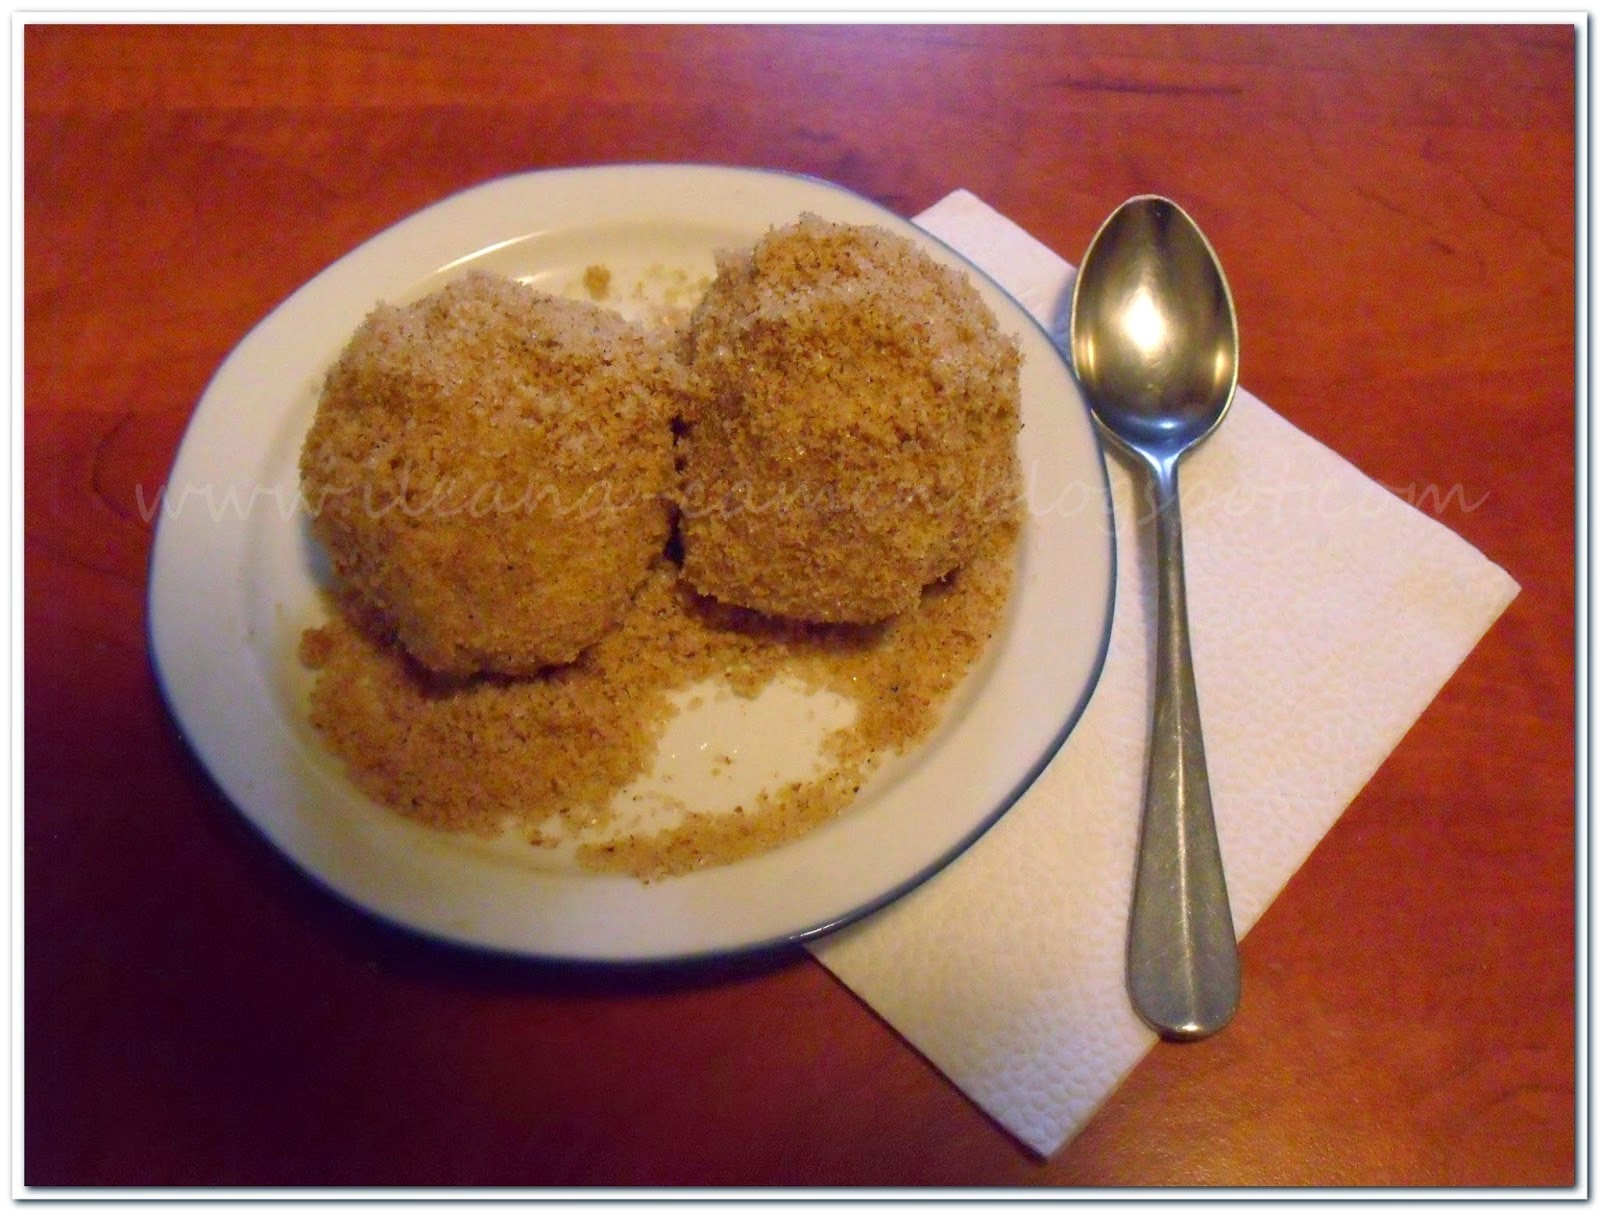 http://ileana-carmen.blogspot.ro/2014/12/receipe-dumplings-with-plum.html